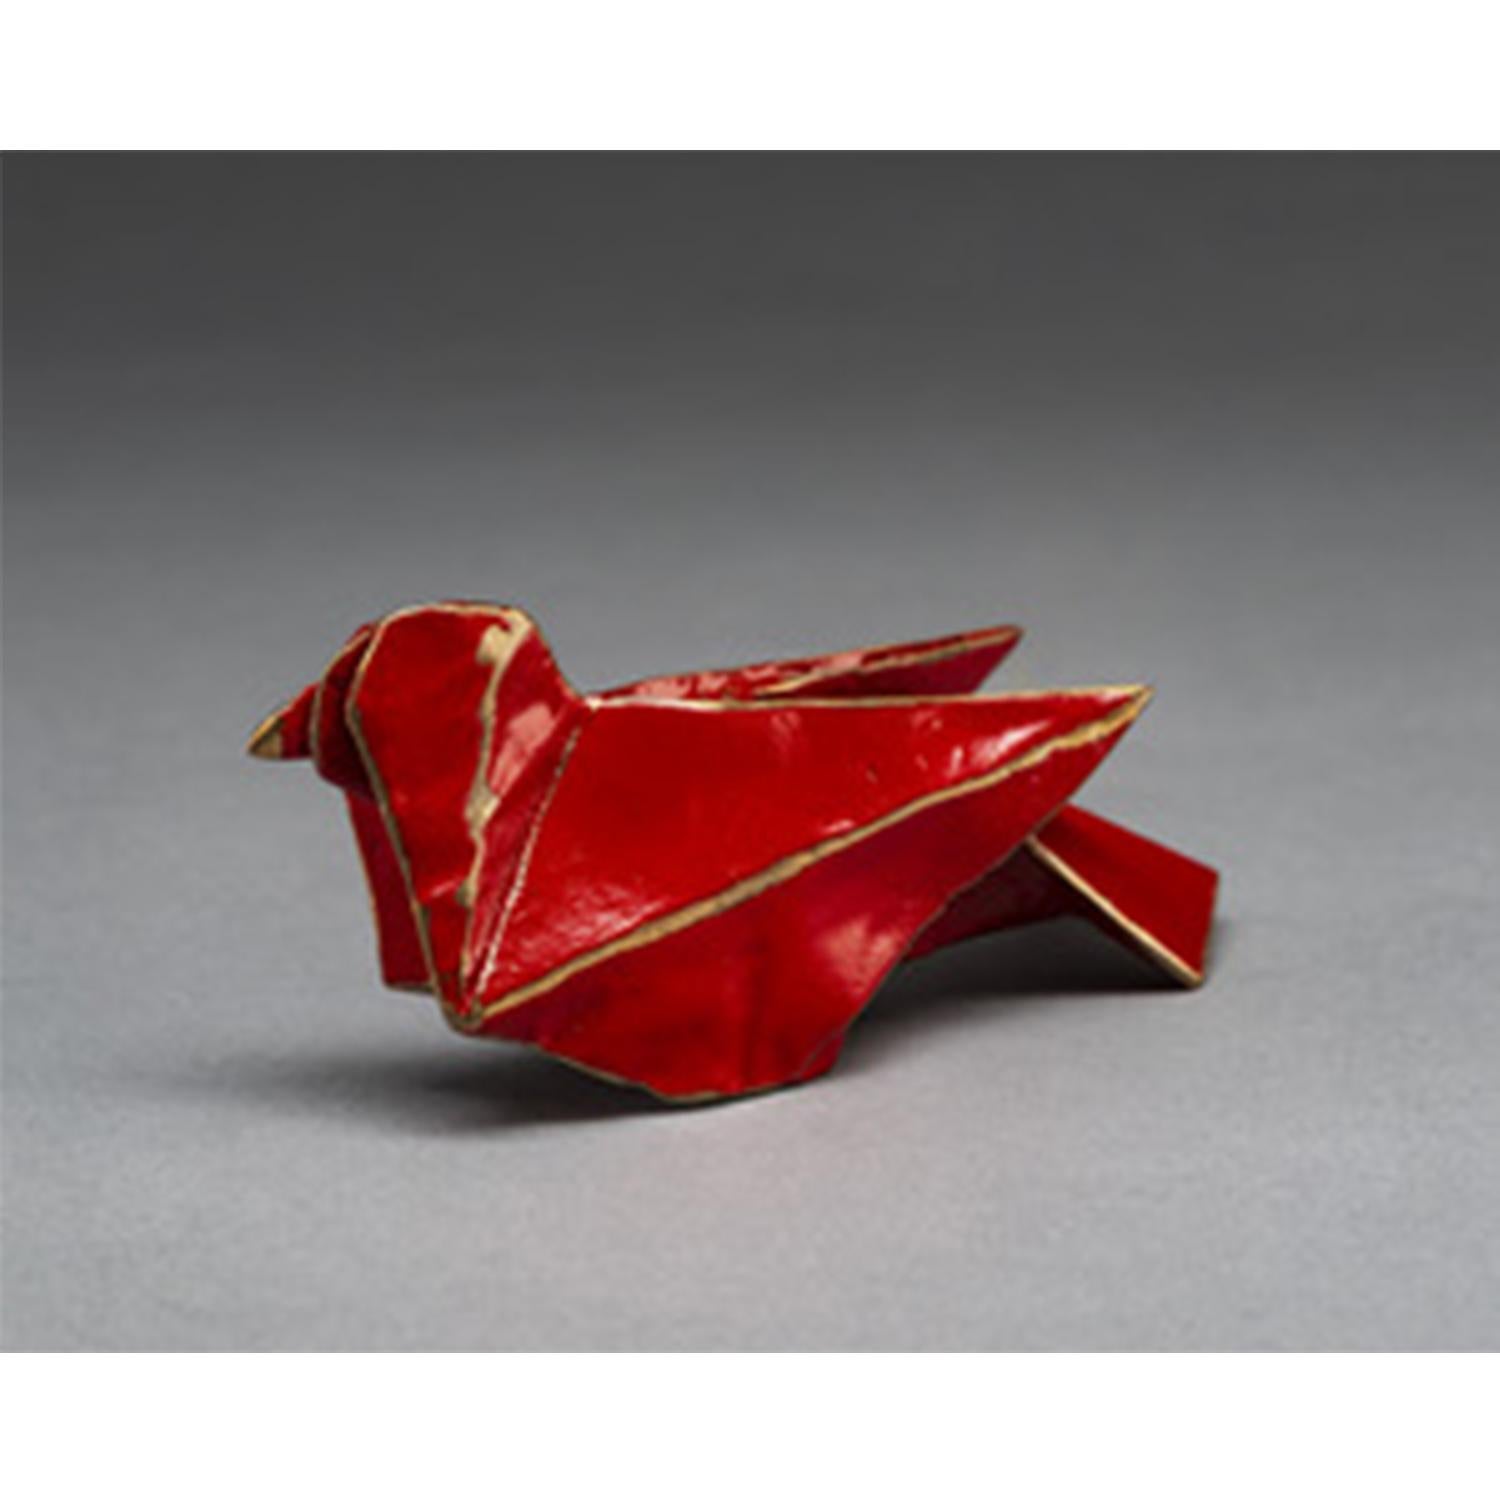 Kevin Box Figurative Sculpture - Bird in Hand (Red) - Robert J. Lang